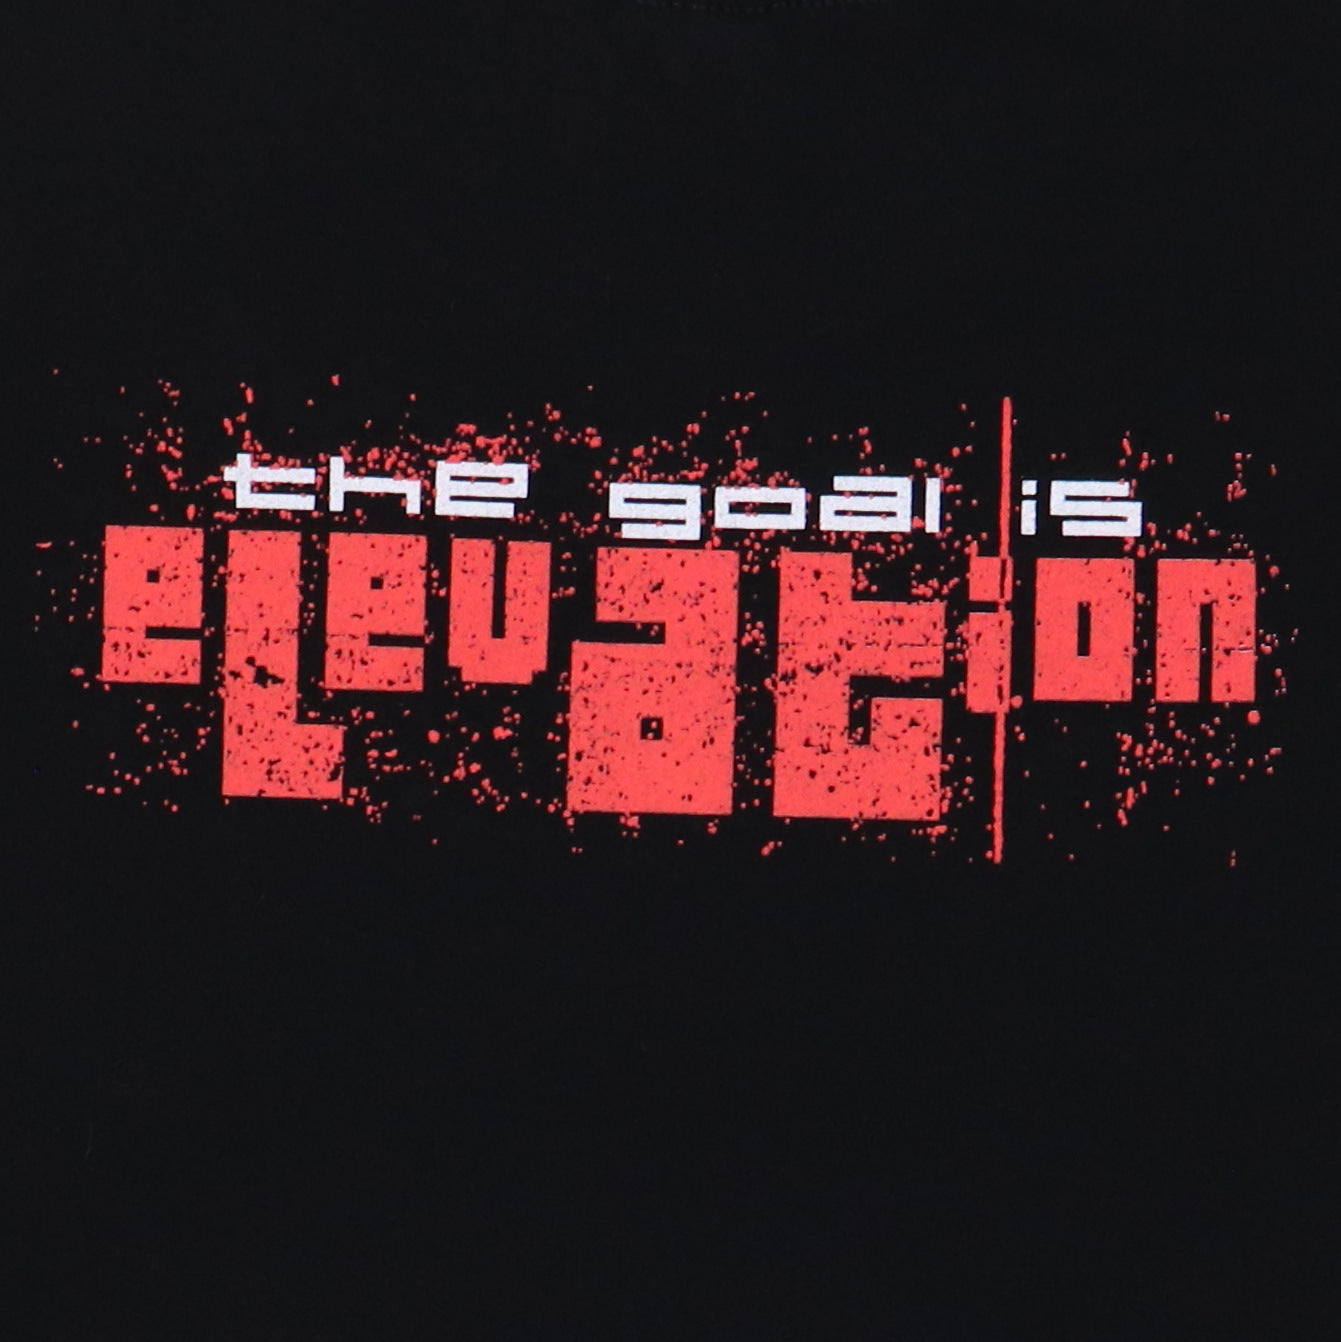 2001 U2 Elevation Shirt